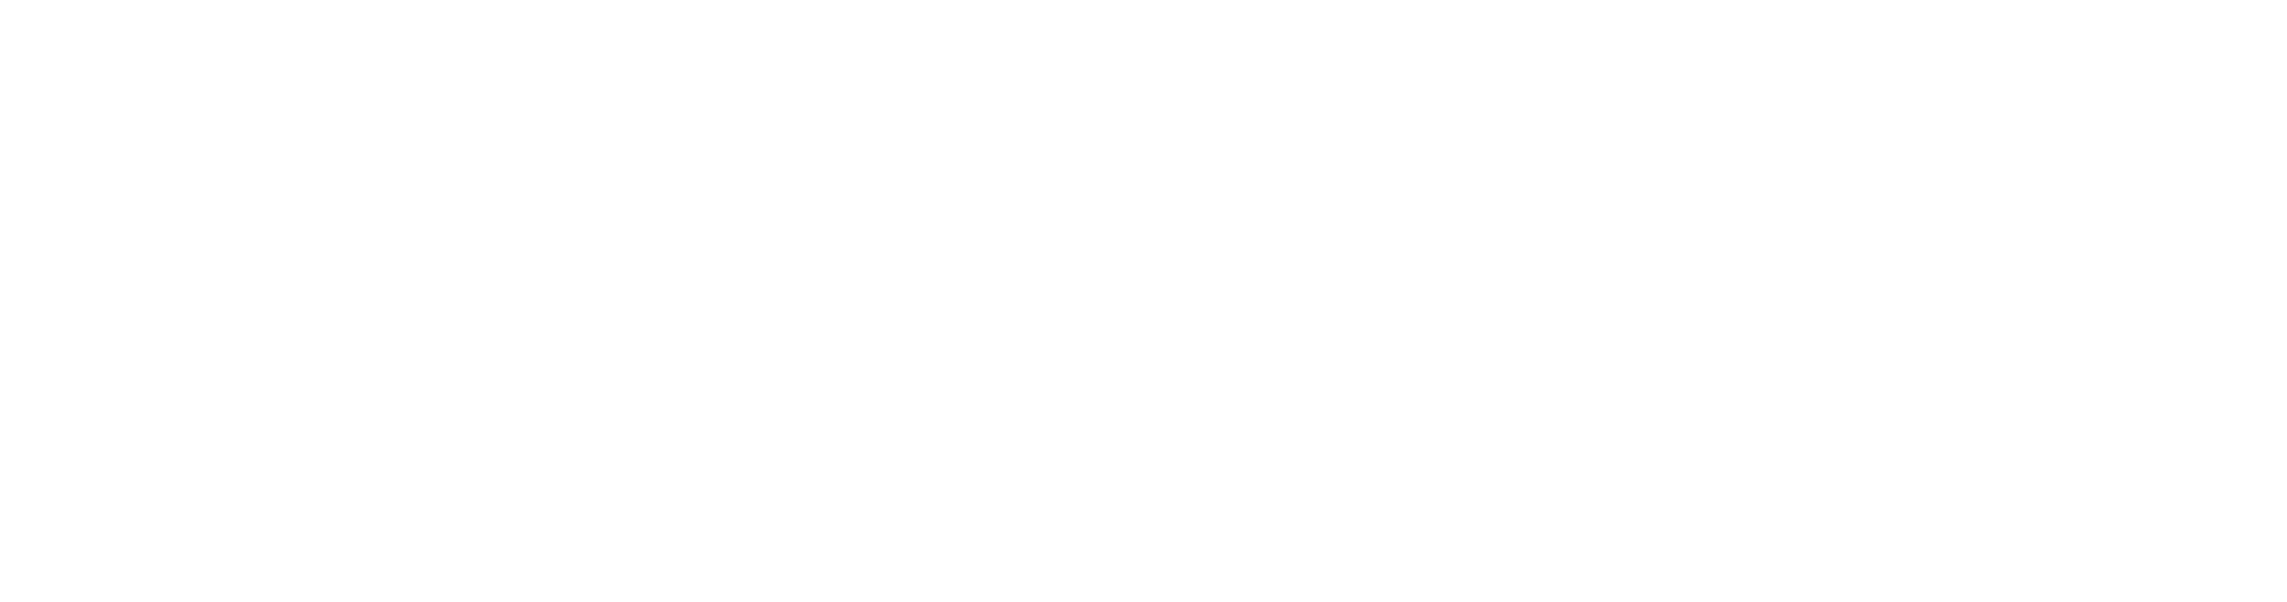 Damkören SALT logotyp i vitt